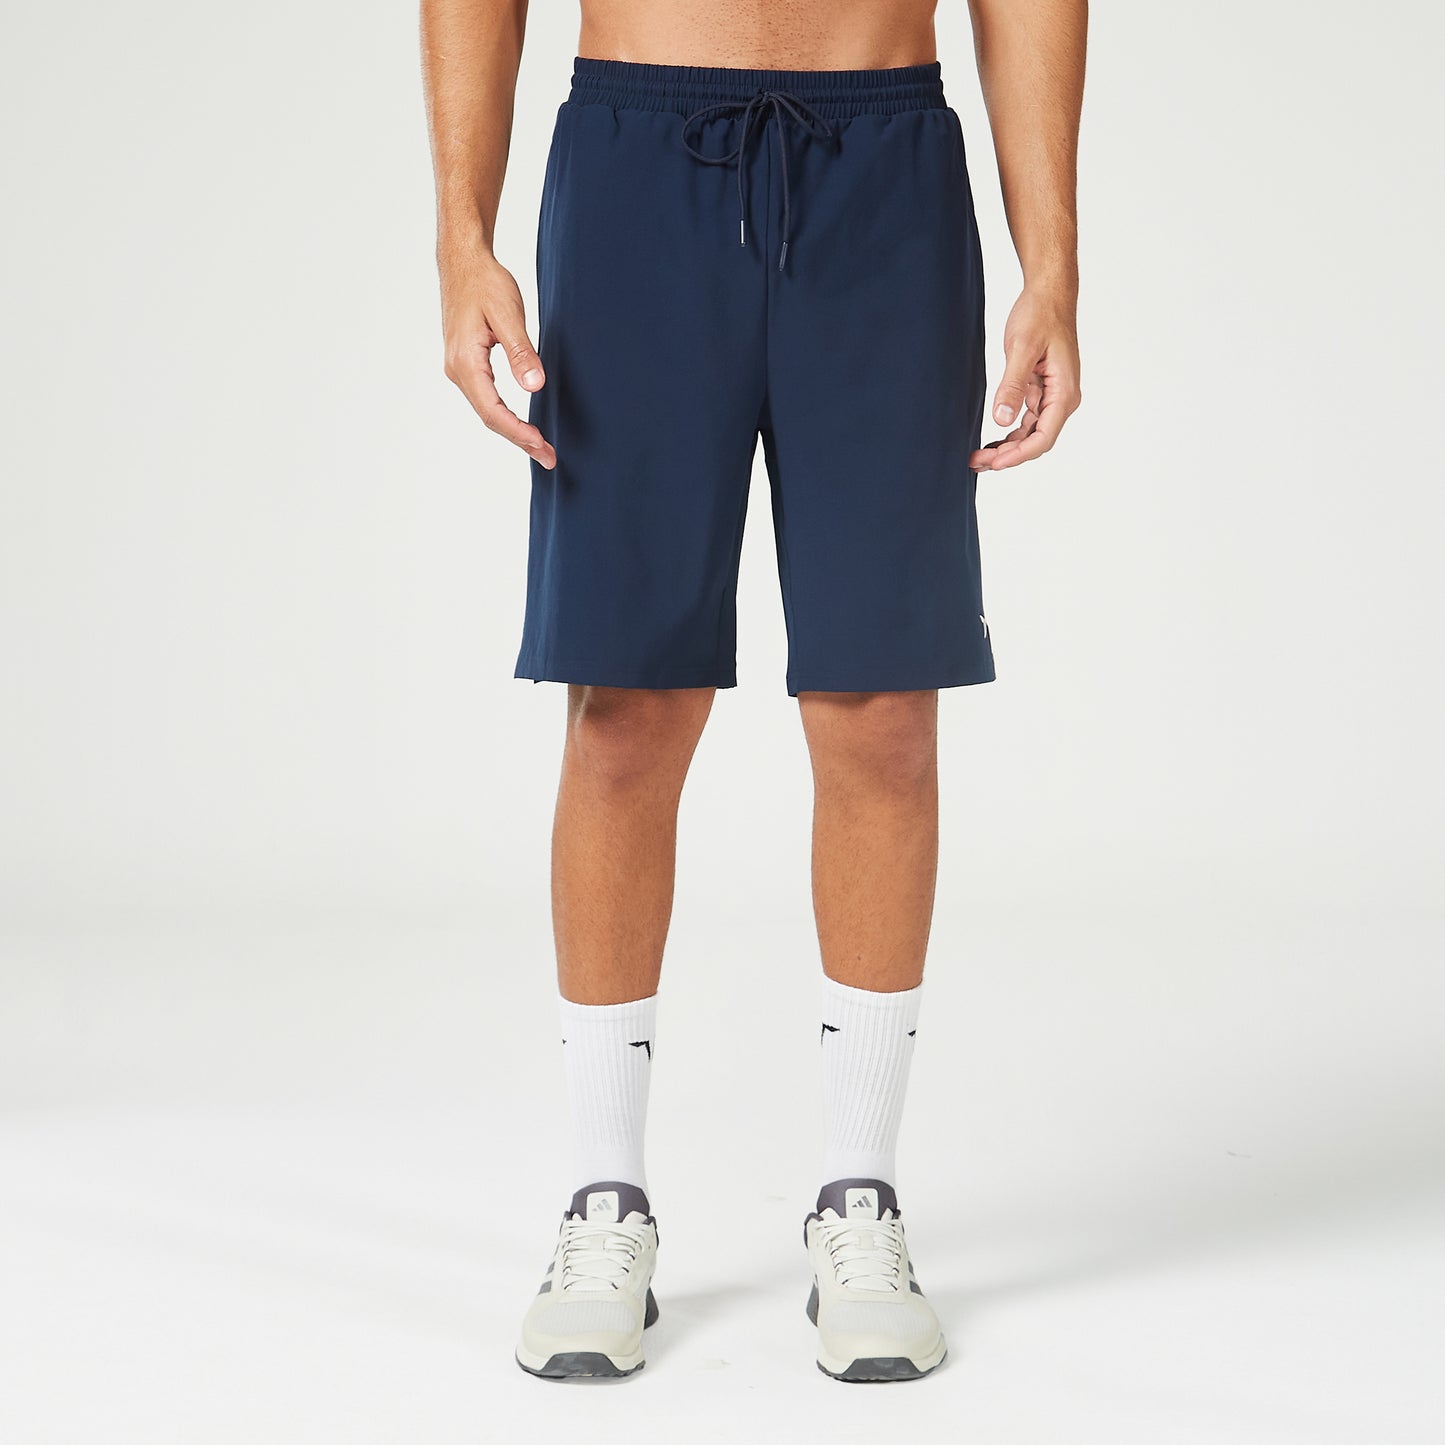 Essential 9" Shorts 2.0 - Navy